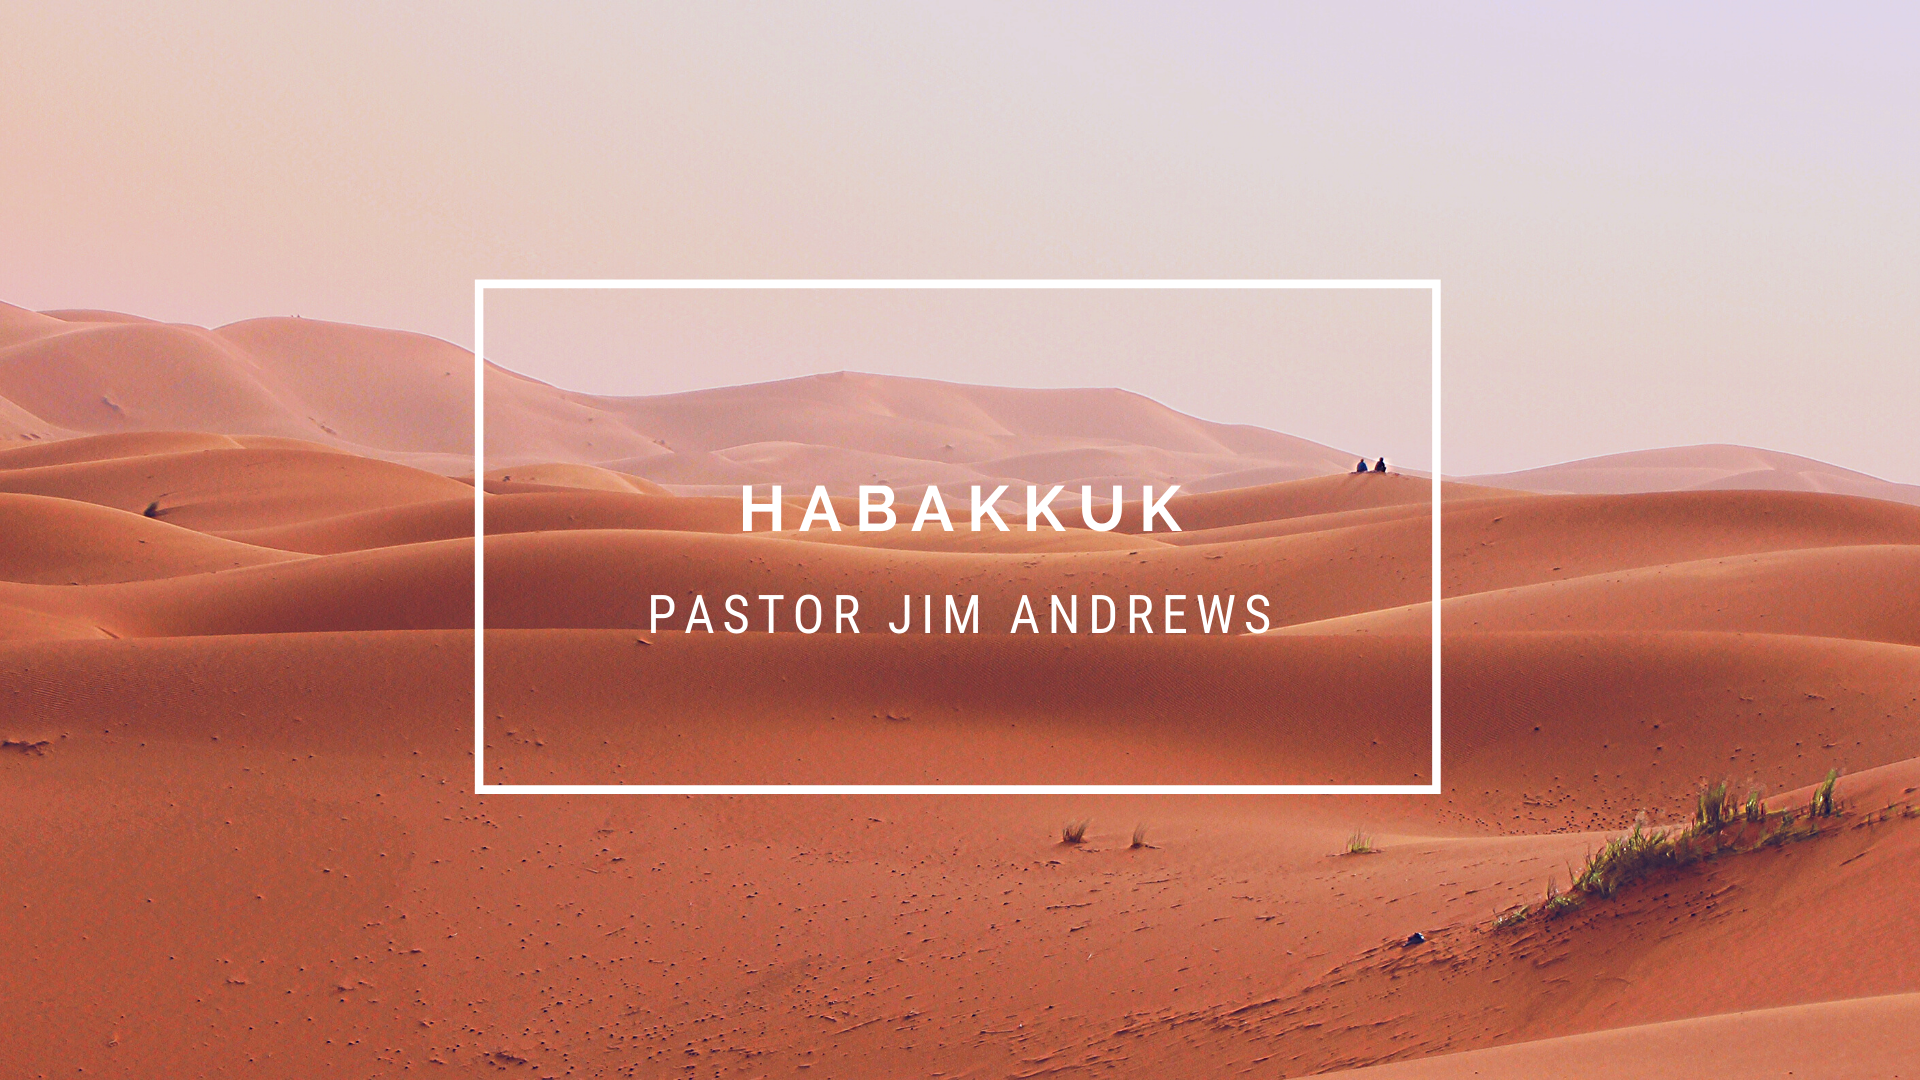 Habakkuk 2:10-20